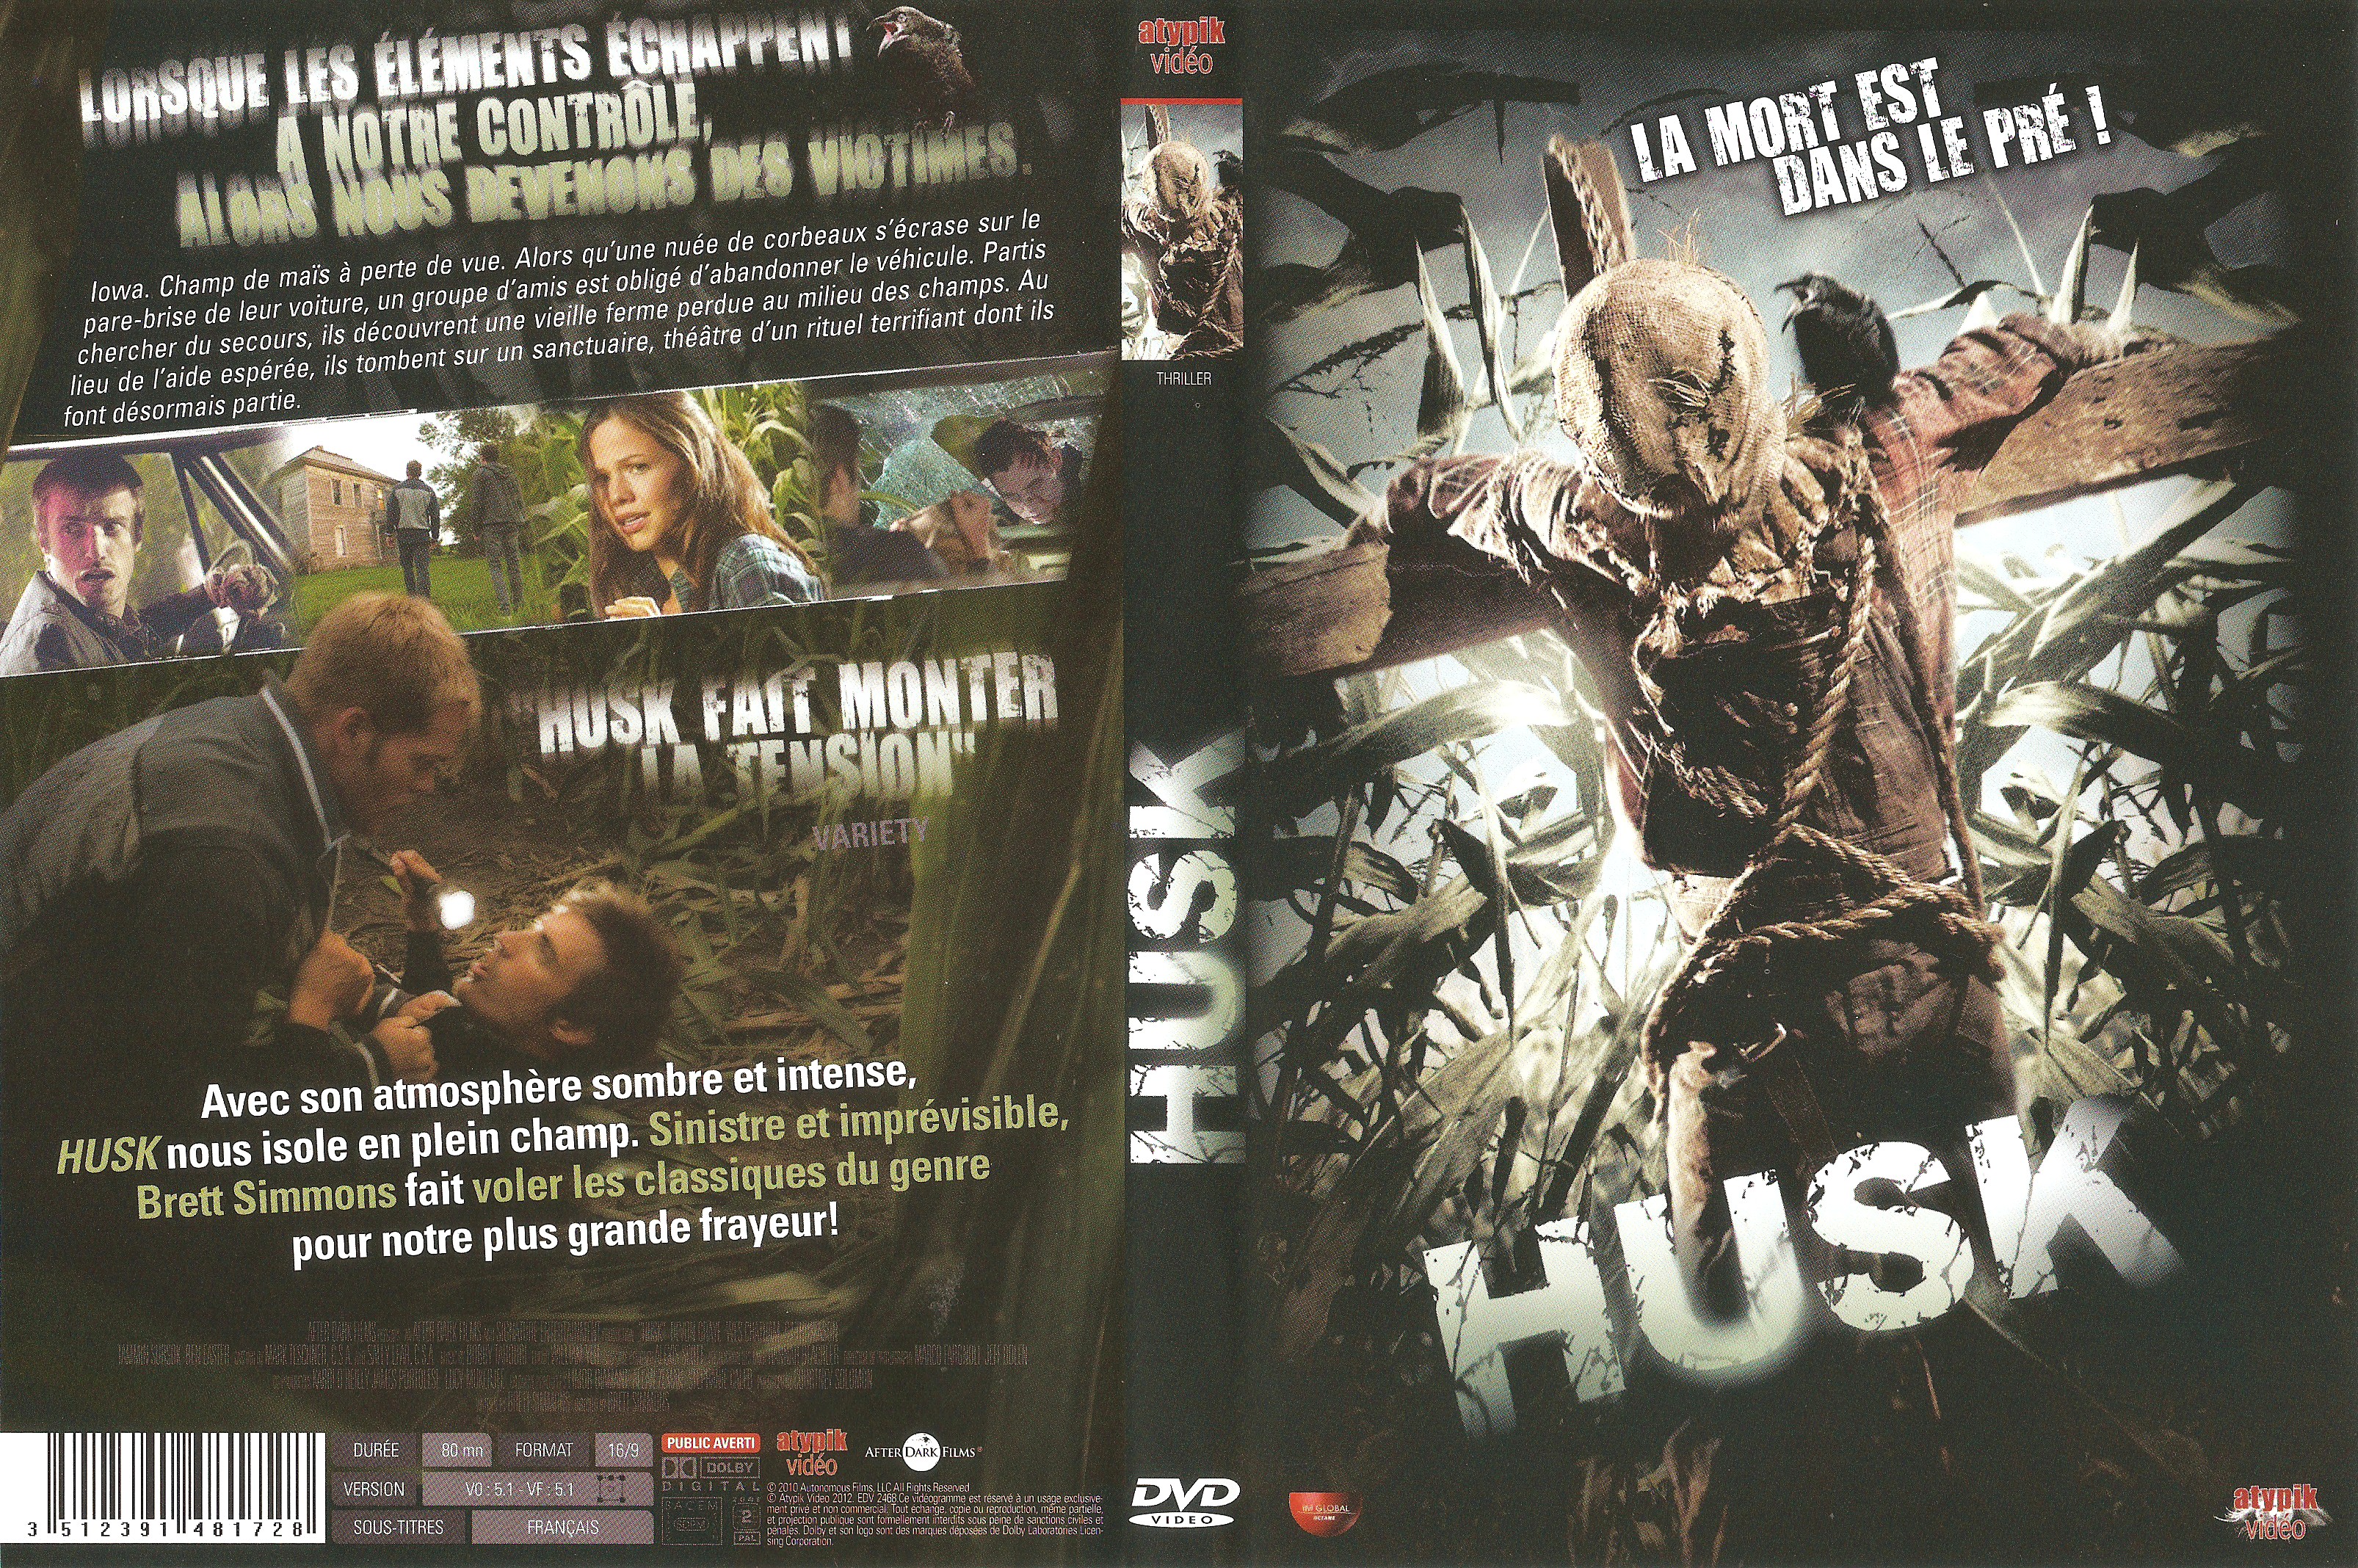 Jaquette DVD Husk